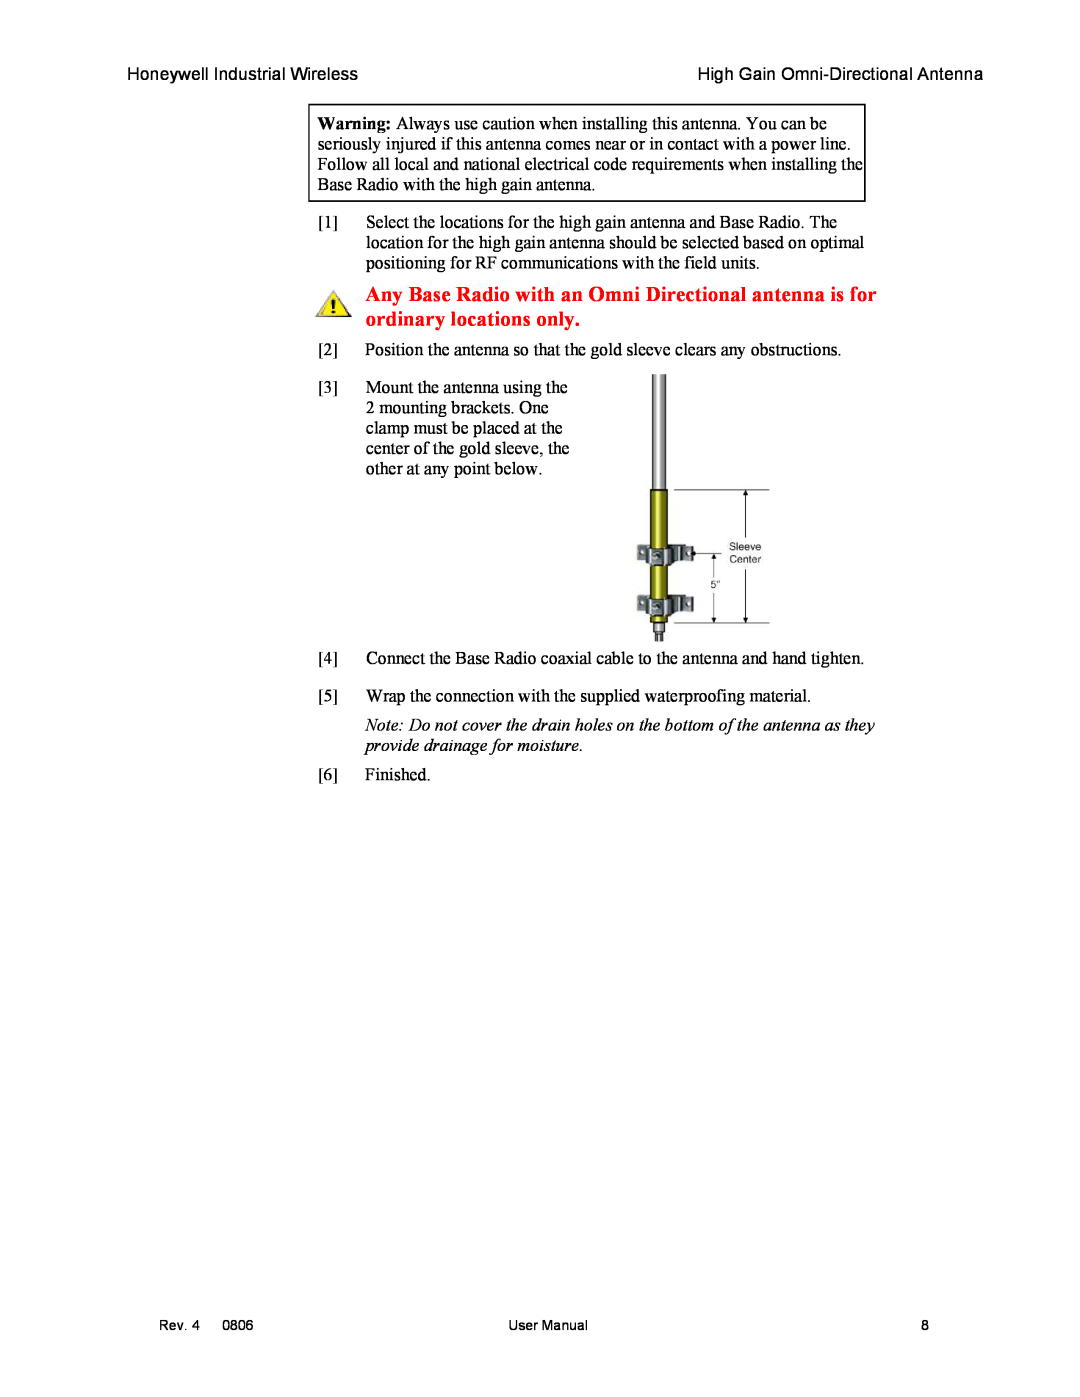 Honeywell High Gain Omni Directional Antenna manual 6Finished 